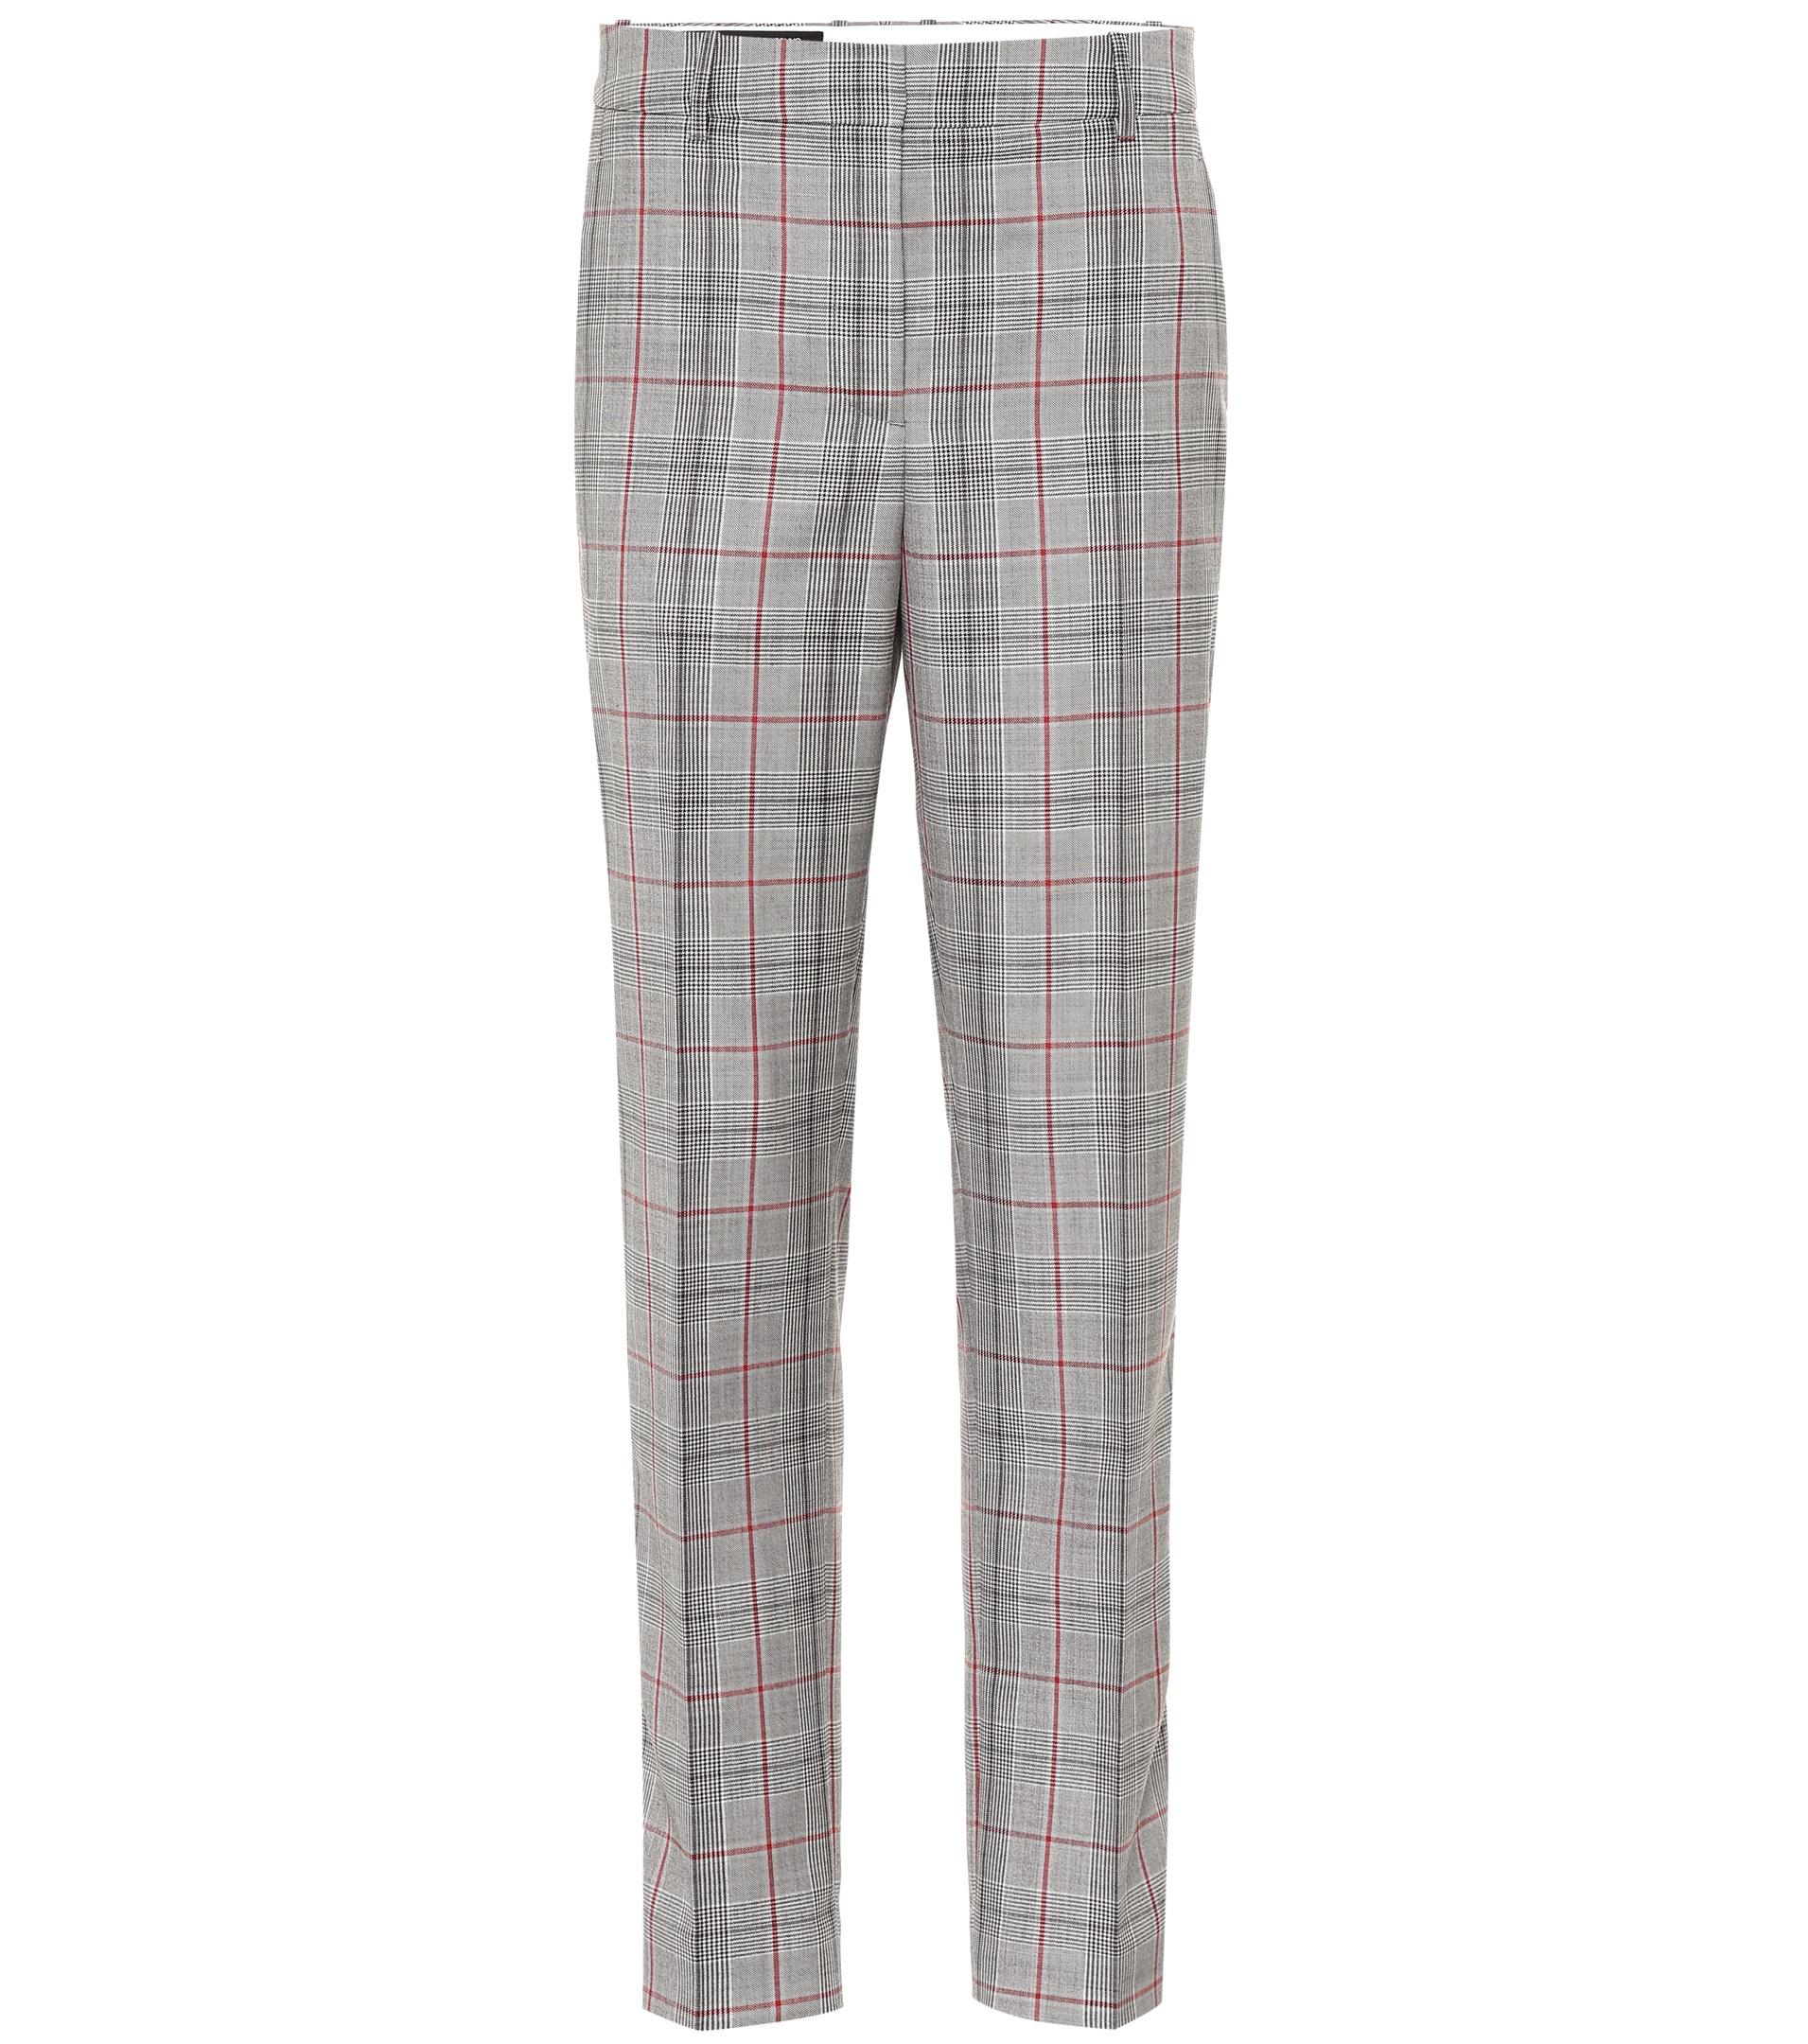 CALVIN KLEIN 205W39NYC Plaid Wool Pants in Grey (Gray) - Lyst